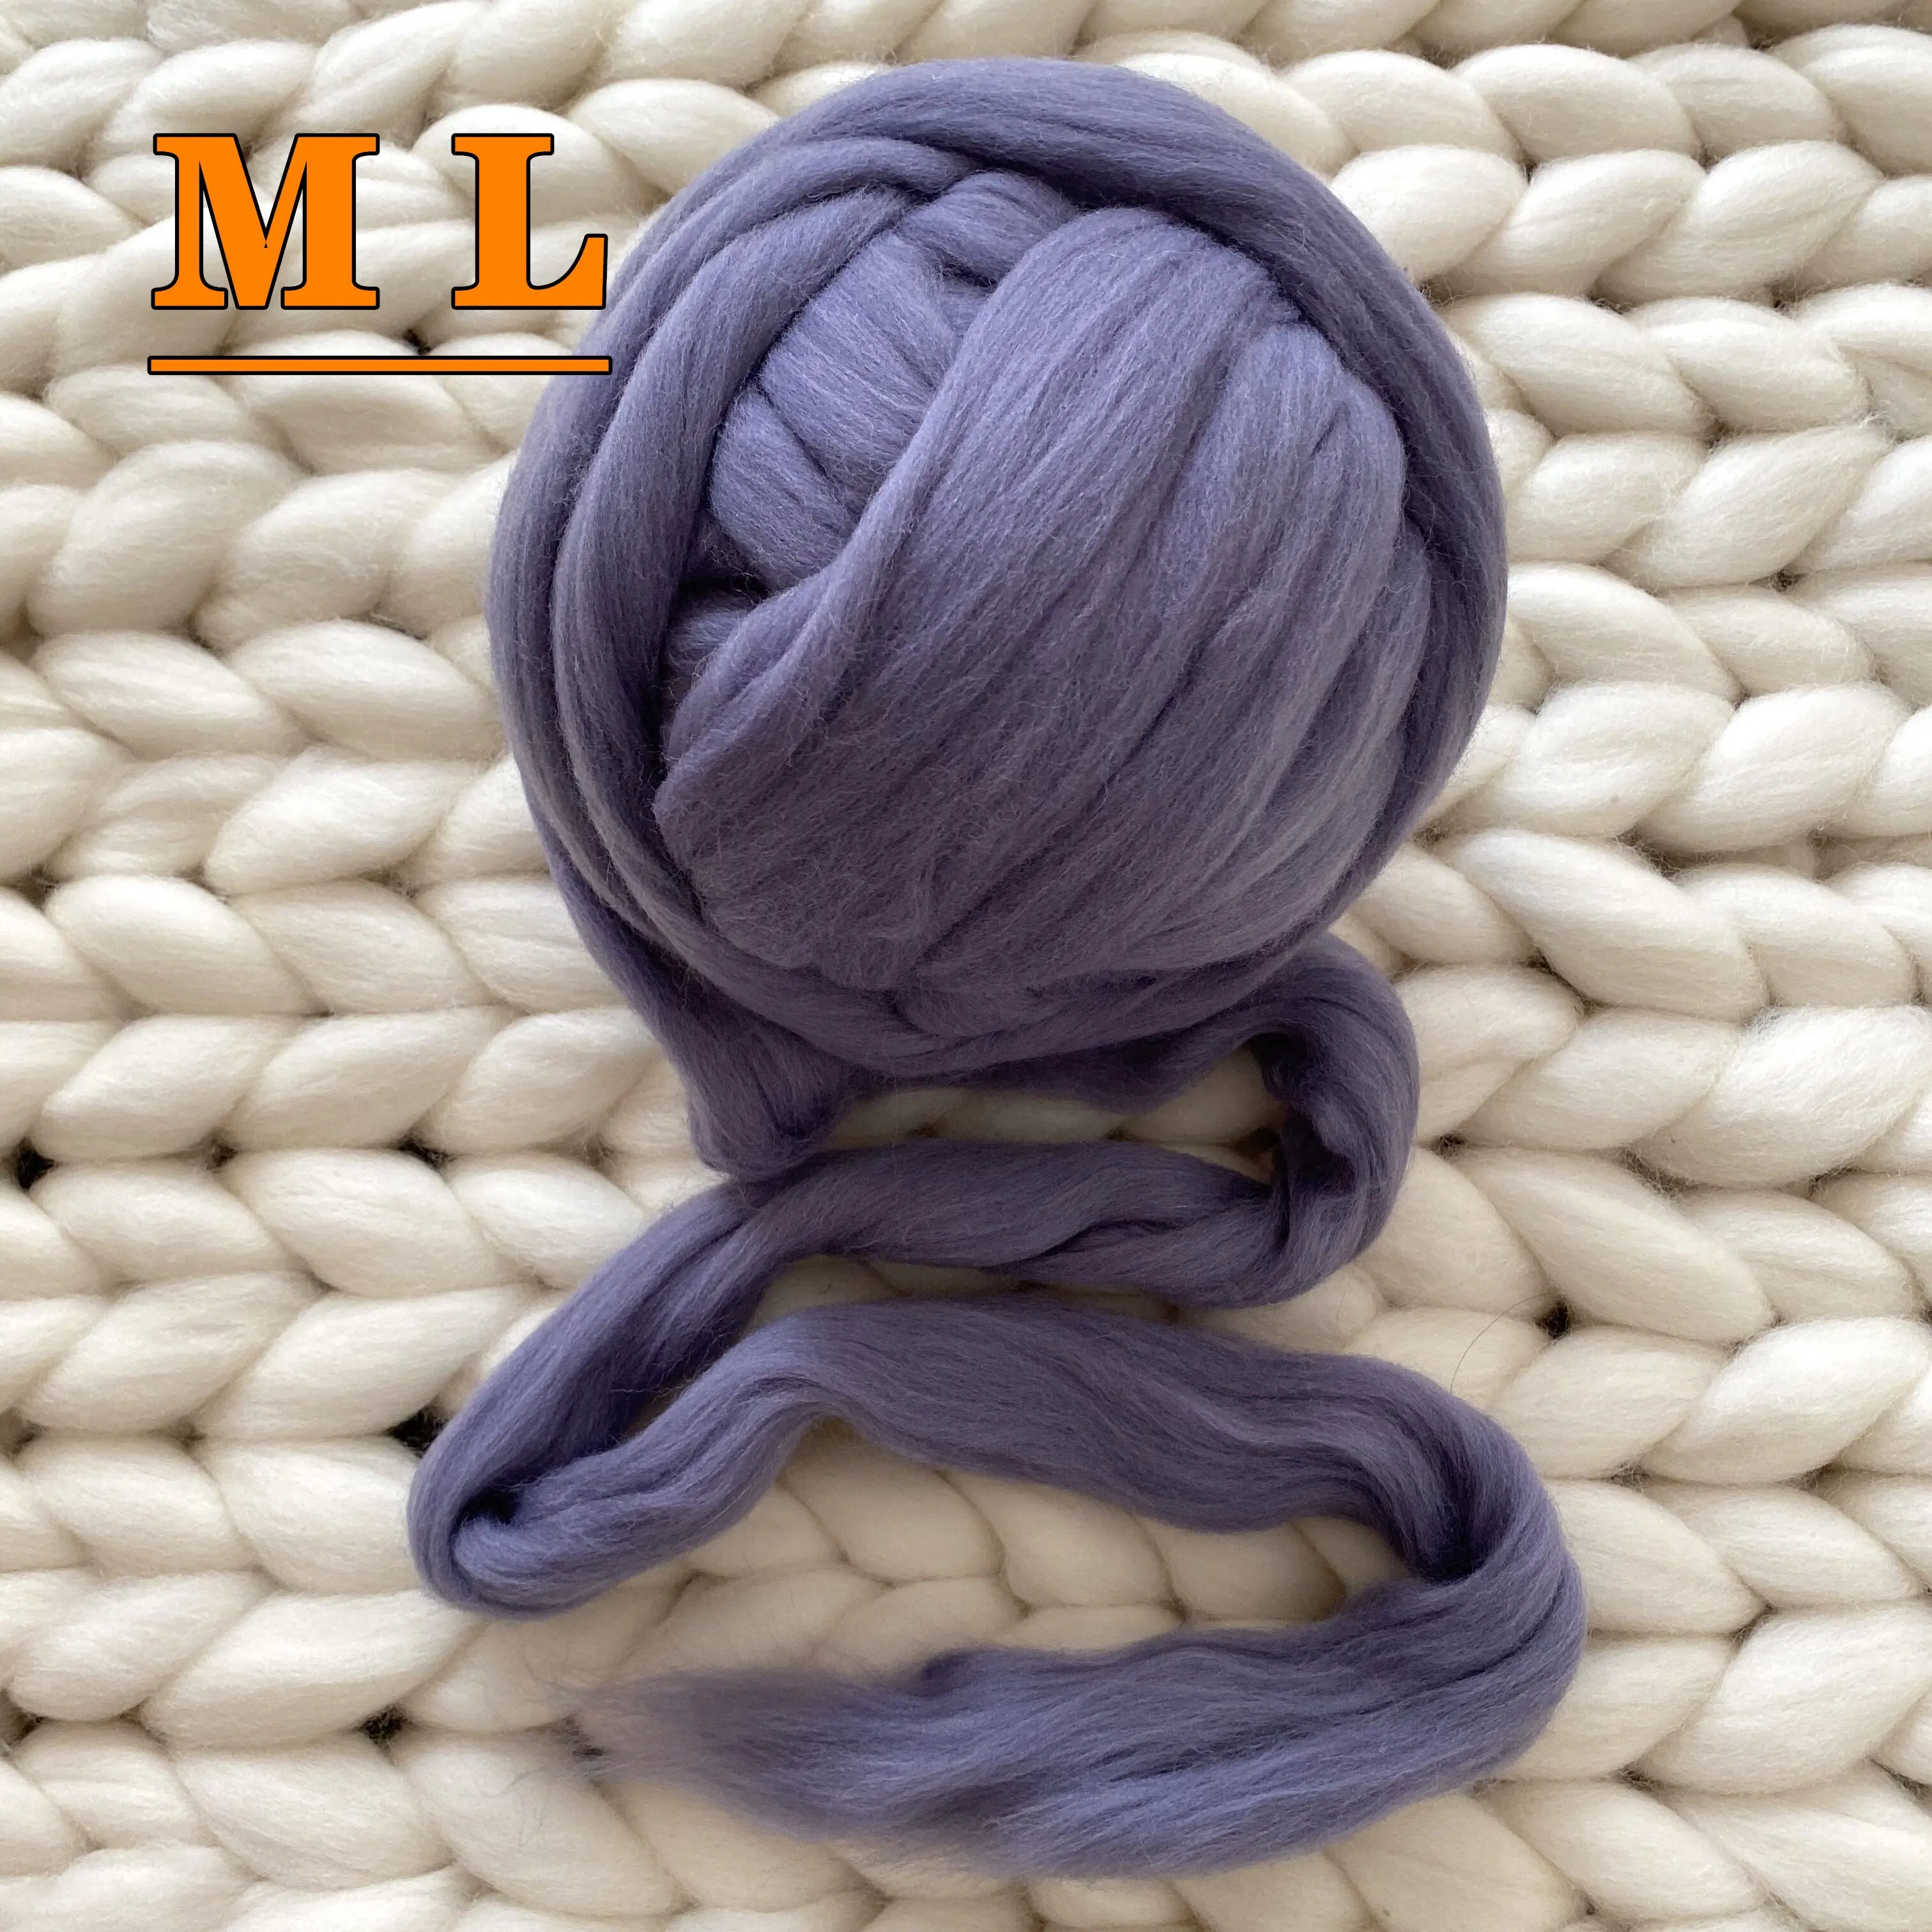 Factory Price 100% Australian Merino Wool Roving Top Thick Yarn Dark Gray Color